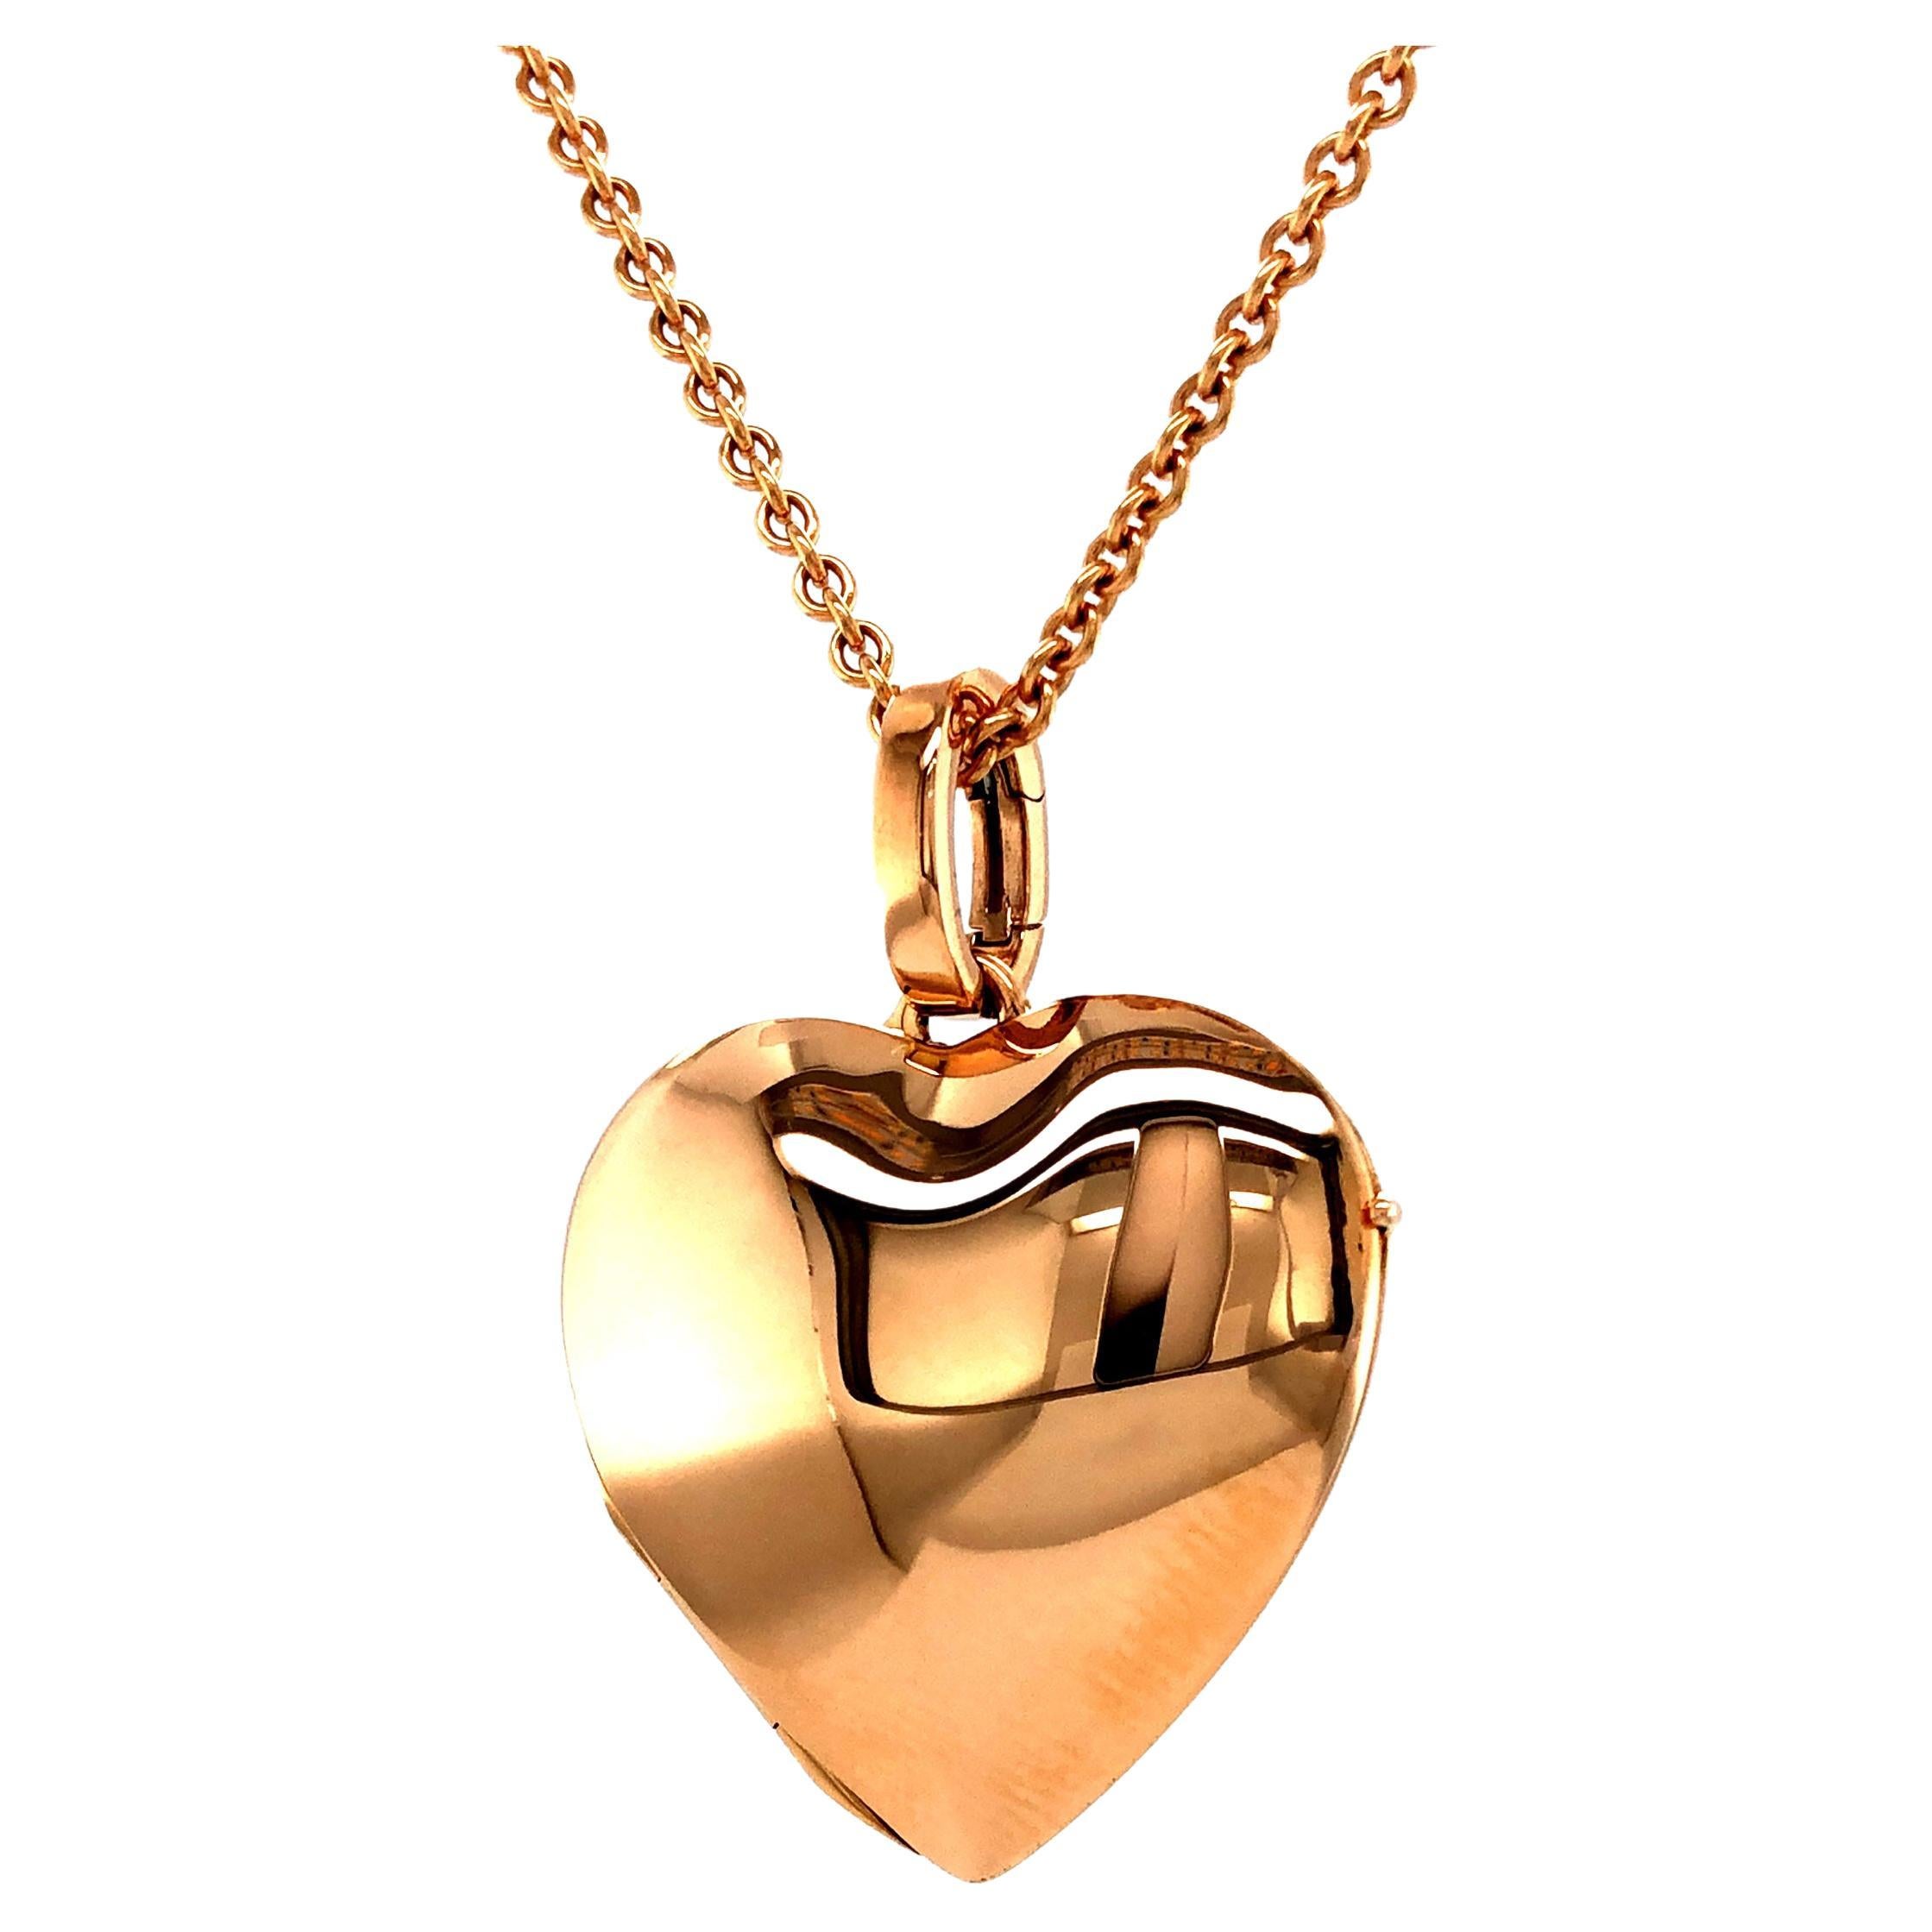 Customizable Heart Shaped Polished Pendant Locket 18k Rose Gold 25 mm x 25 mm